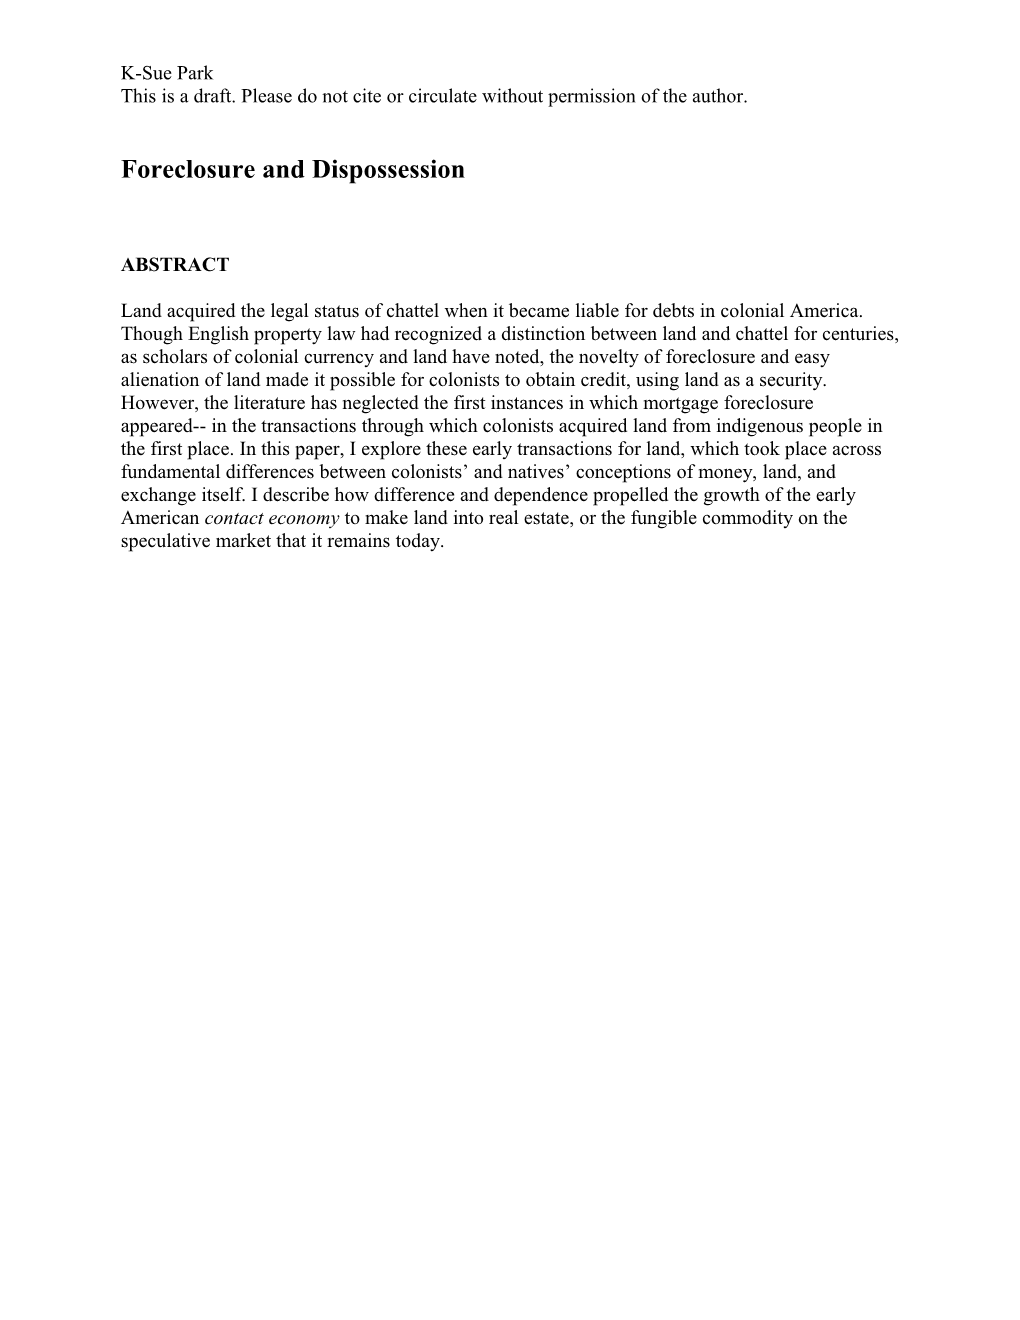 Foreclosure and Dispossession